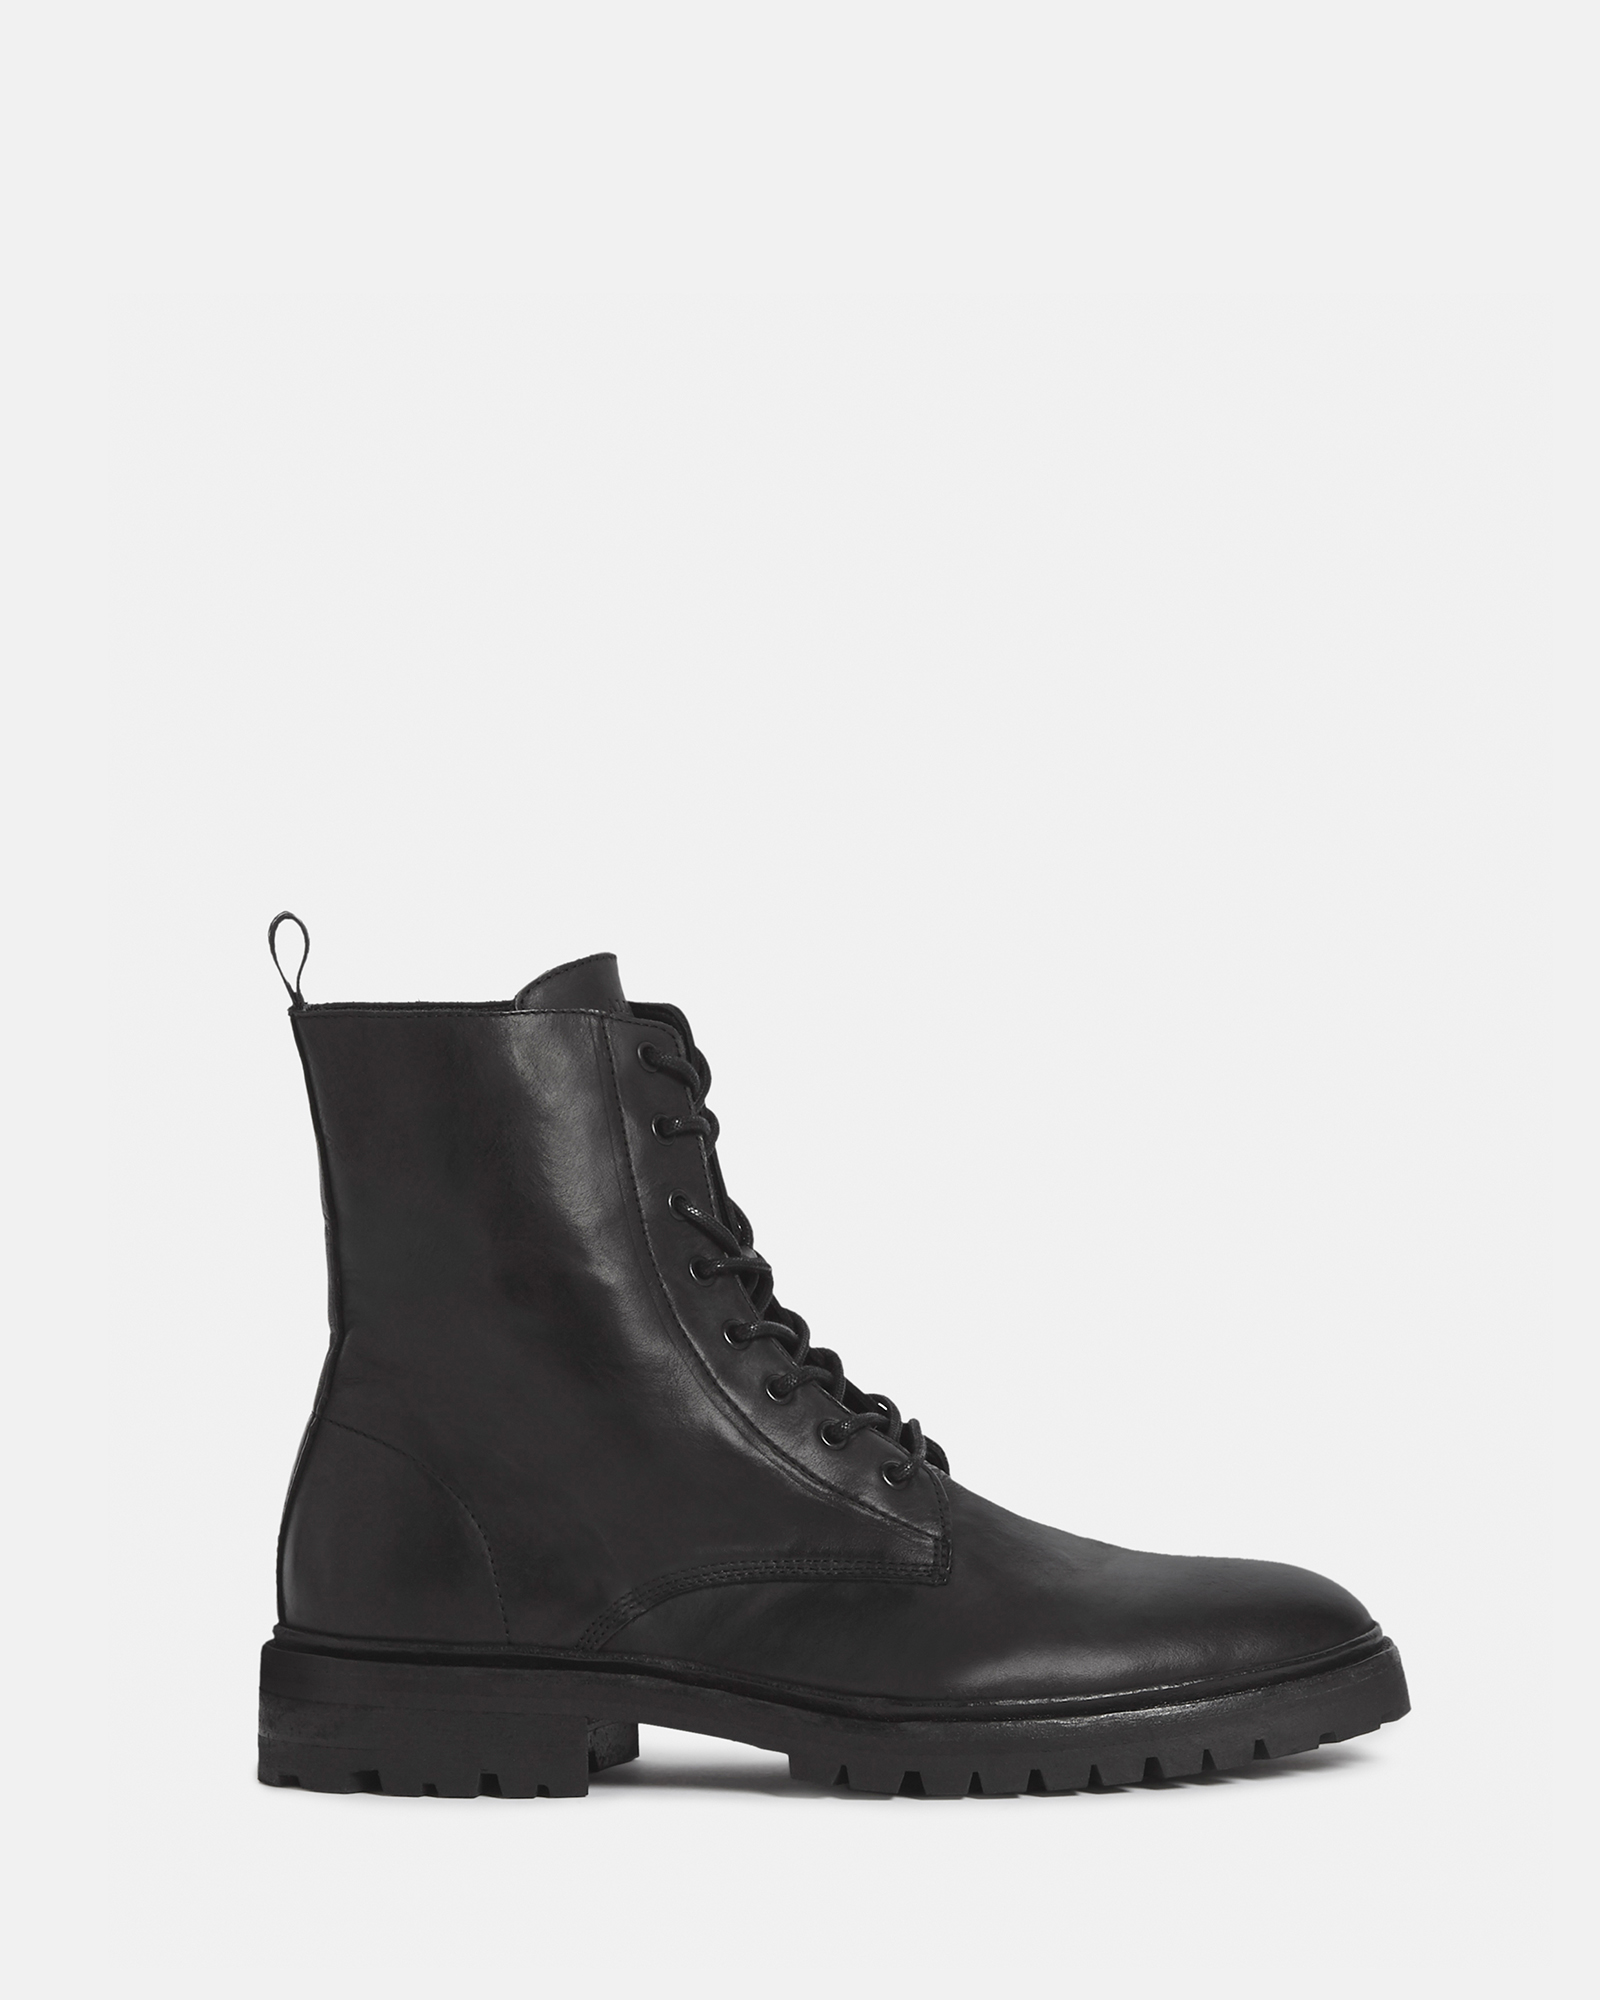 AllSaints Men's Classic Smooth Leather Tobias Boots, Black, Size: UK 7